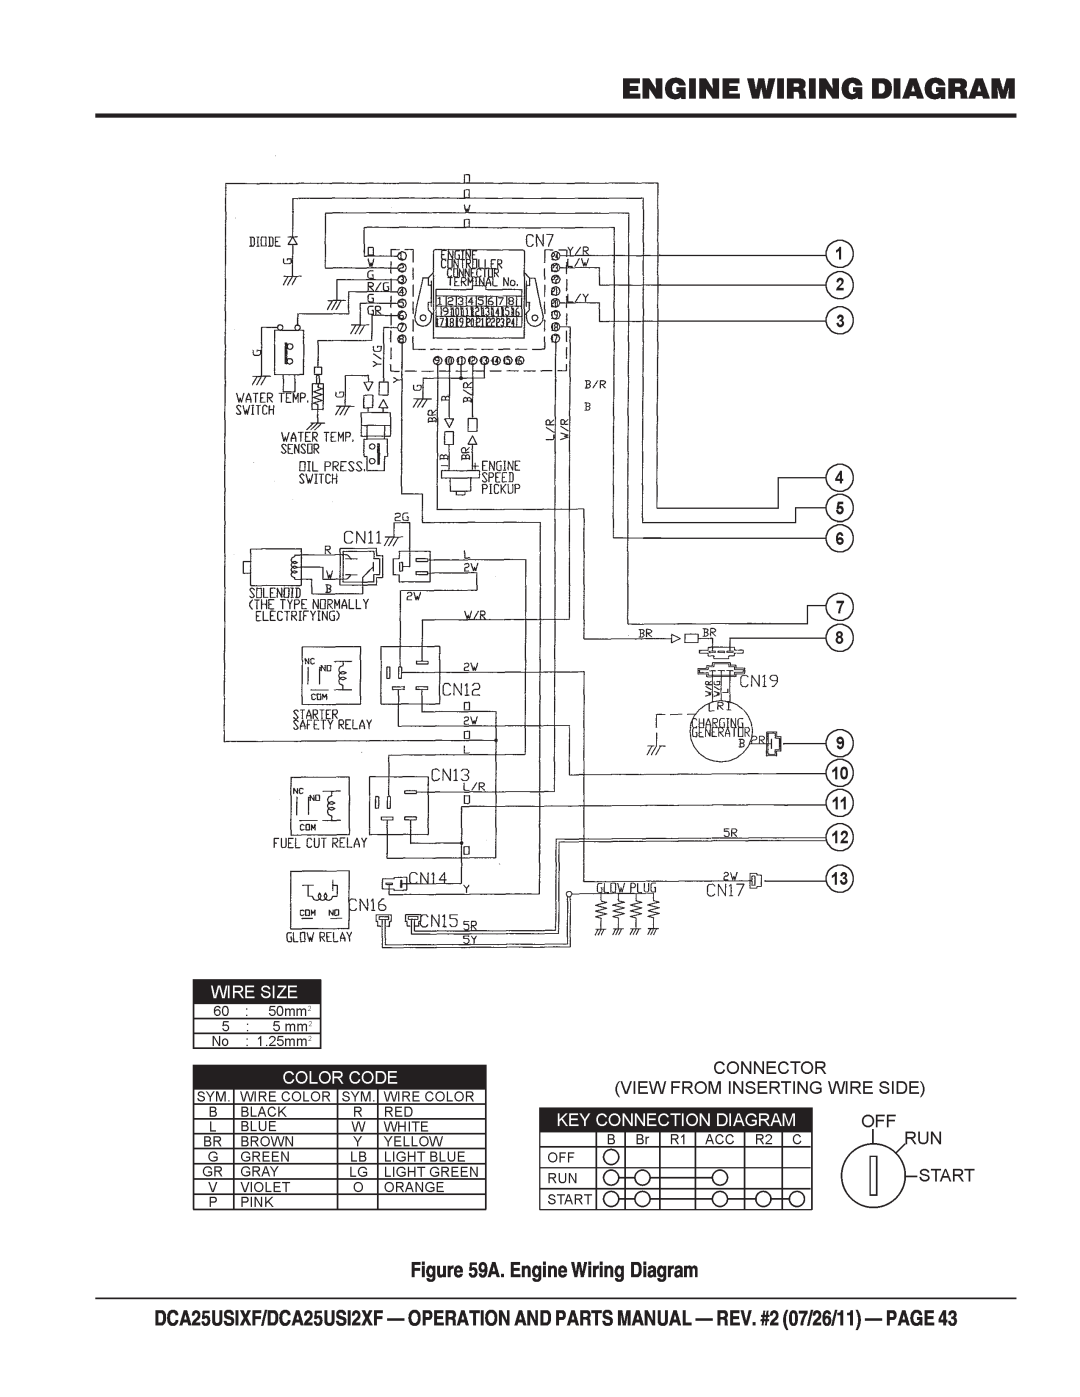 Multiquip DCA25USI2XF, DCA25USIXF operation manual A. Engine Wiring Diagram 